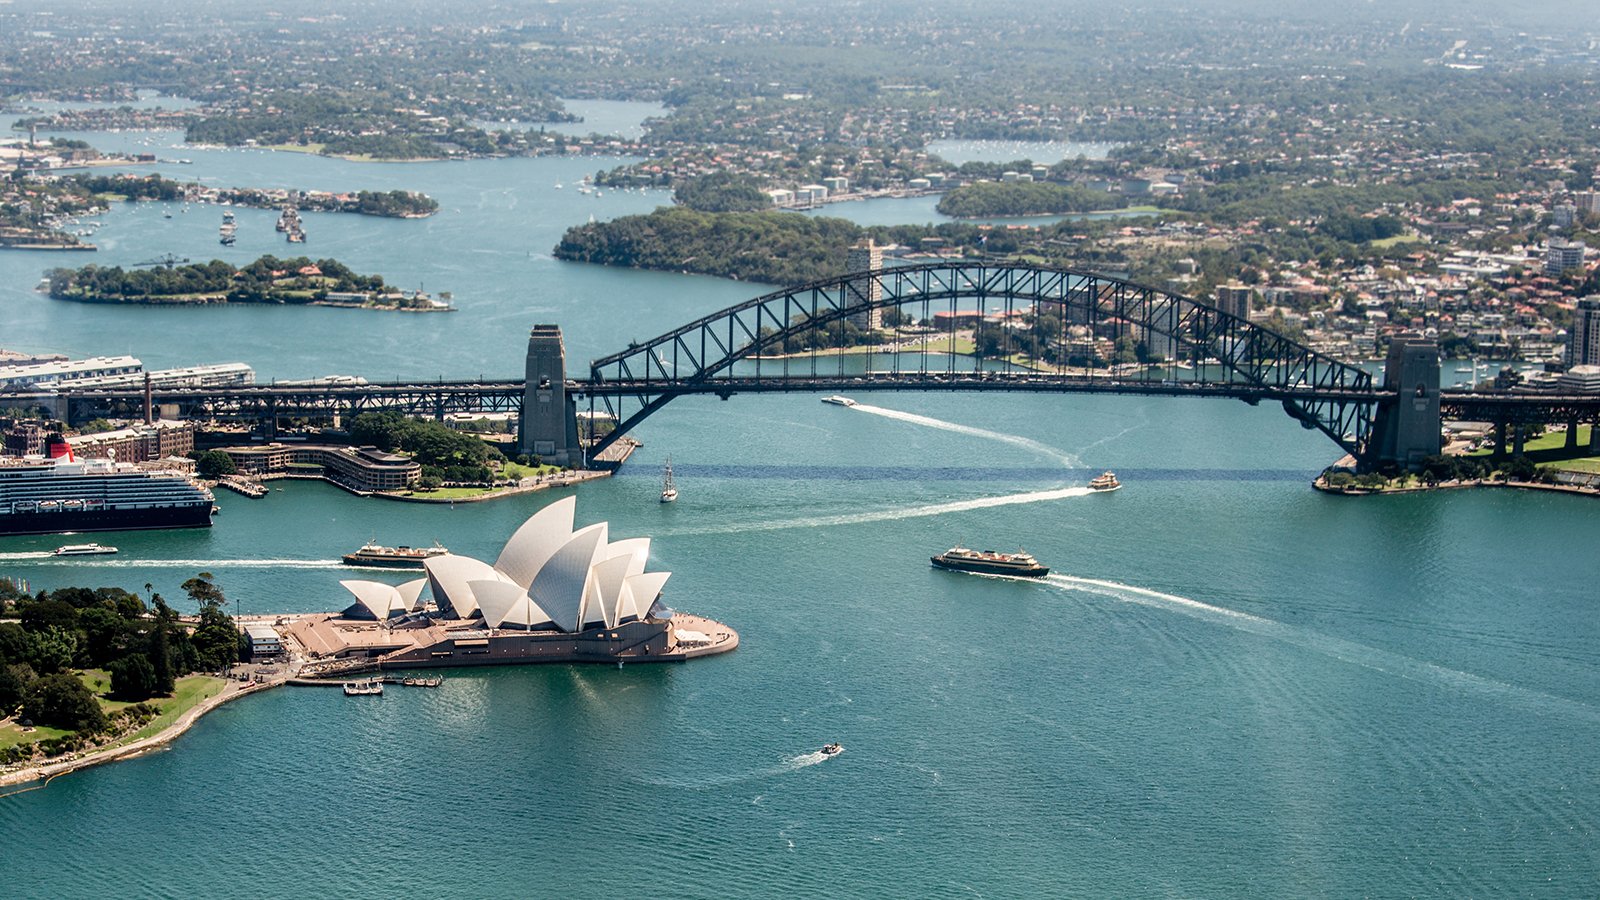 Aerial view of the Opera House and Harbor Bridge in Sydney Australia